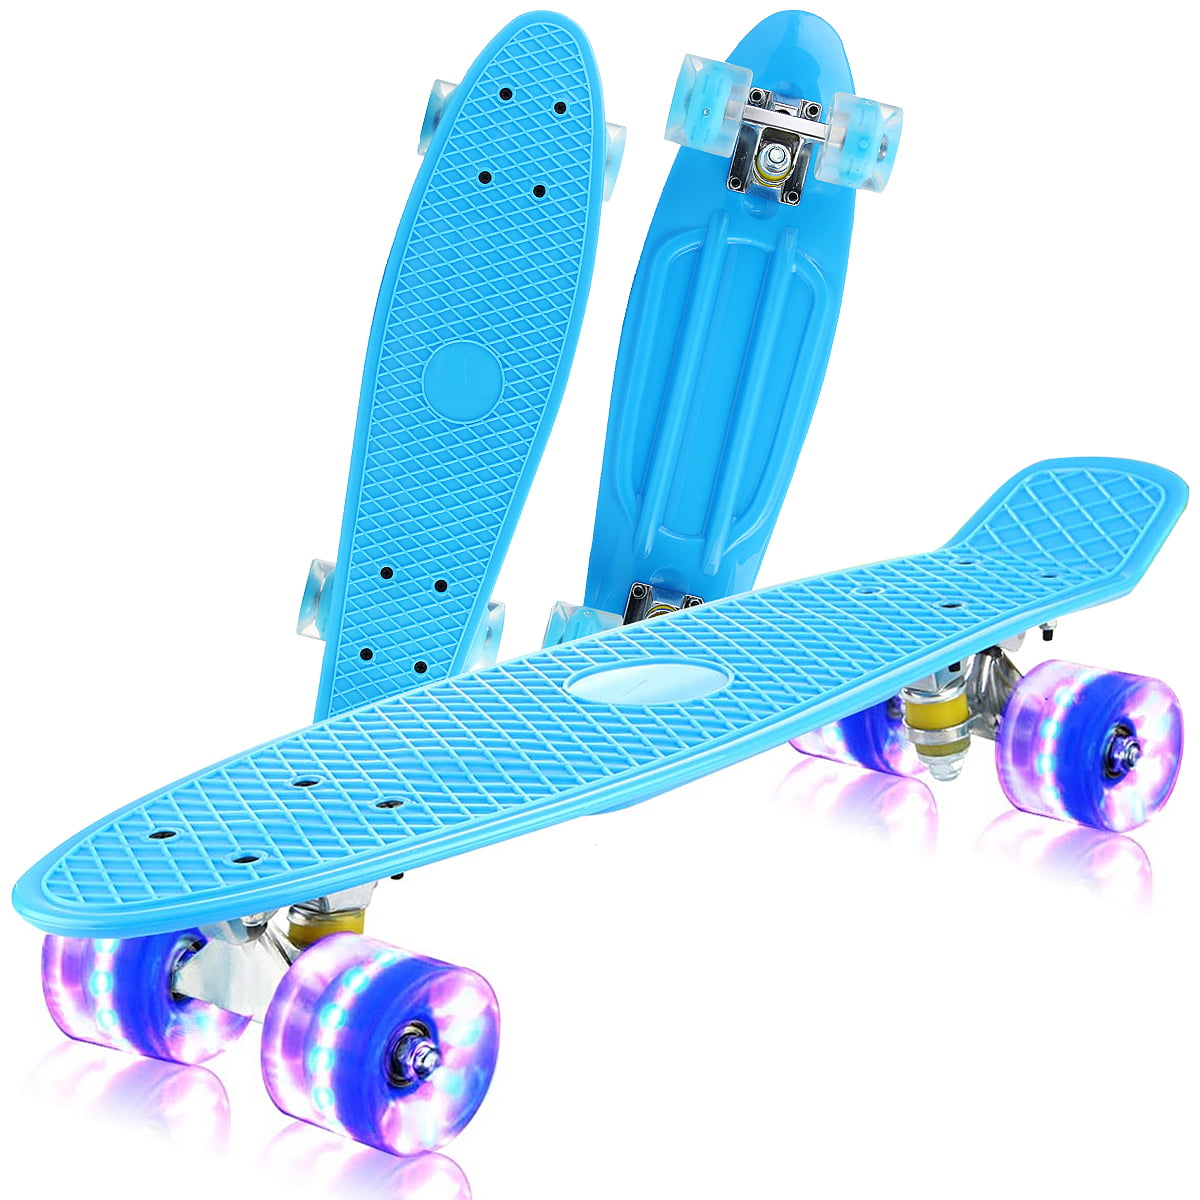 Ridge 22" Mini Cruiser Board Skateboard with DEL wheels and light up Deck